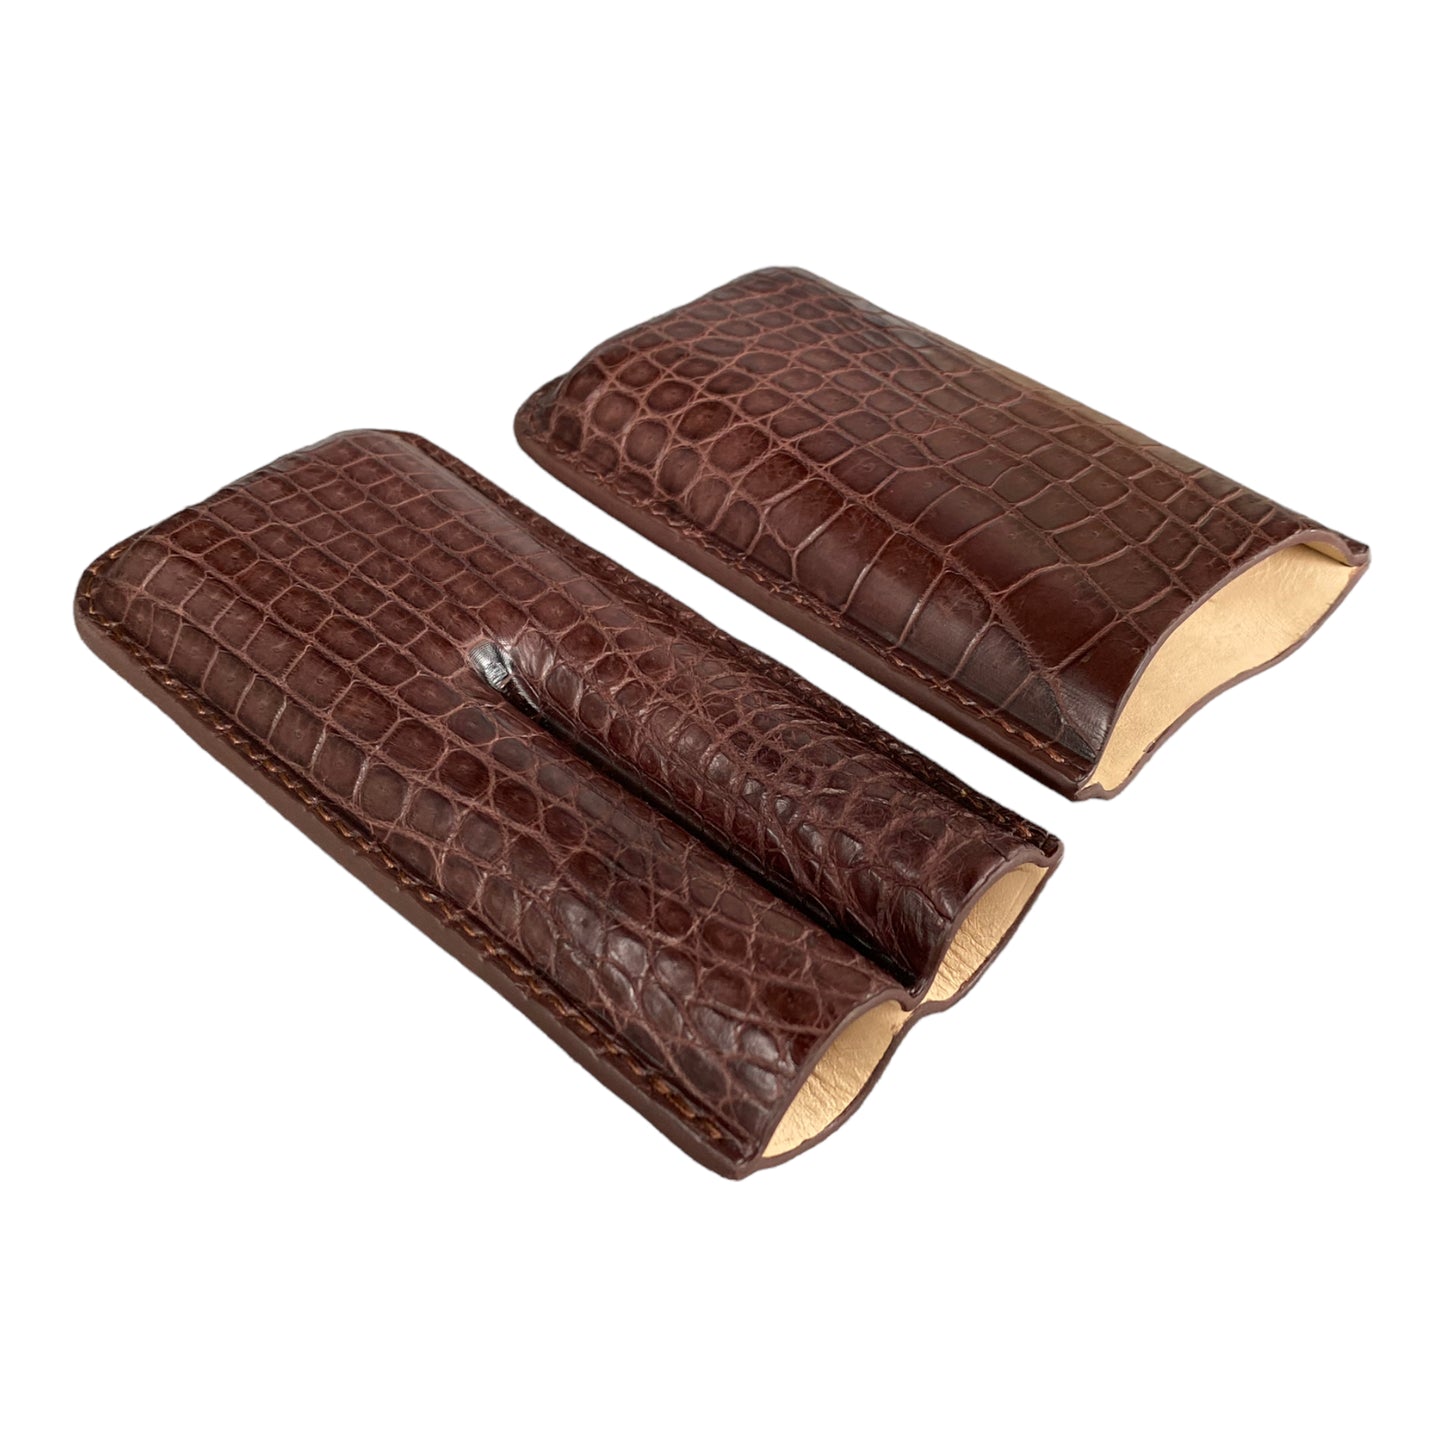 Handmade Luxury Brown Alligator Cigar Case, Leather Cigar Humidor, 2 to 3 Tubes Cigar Case